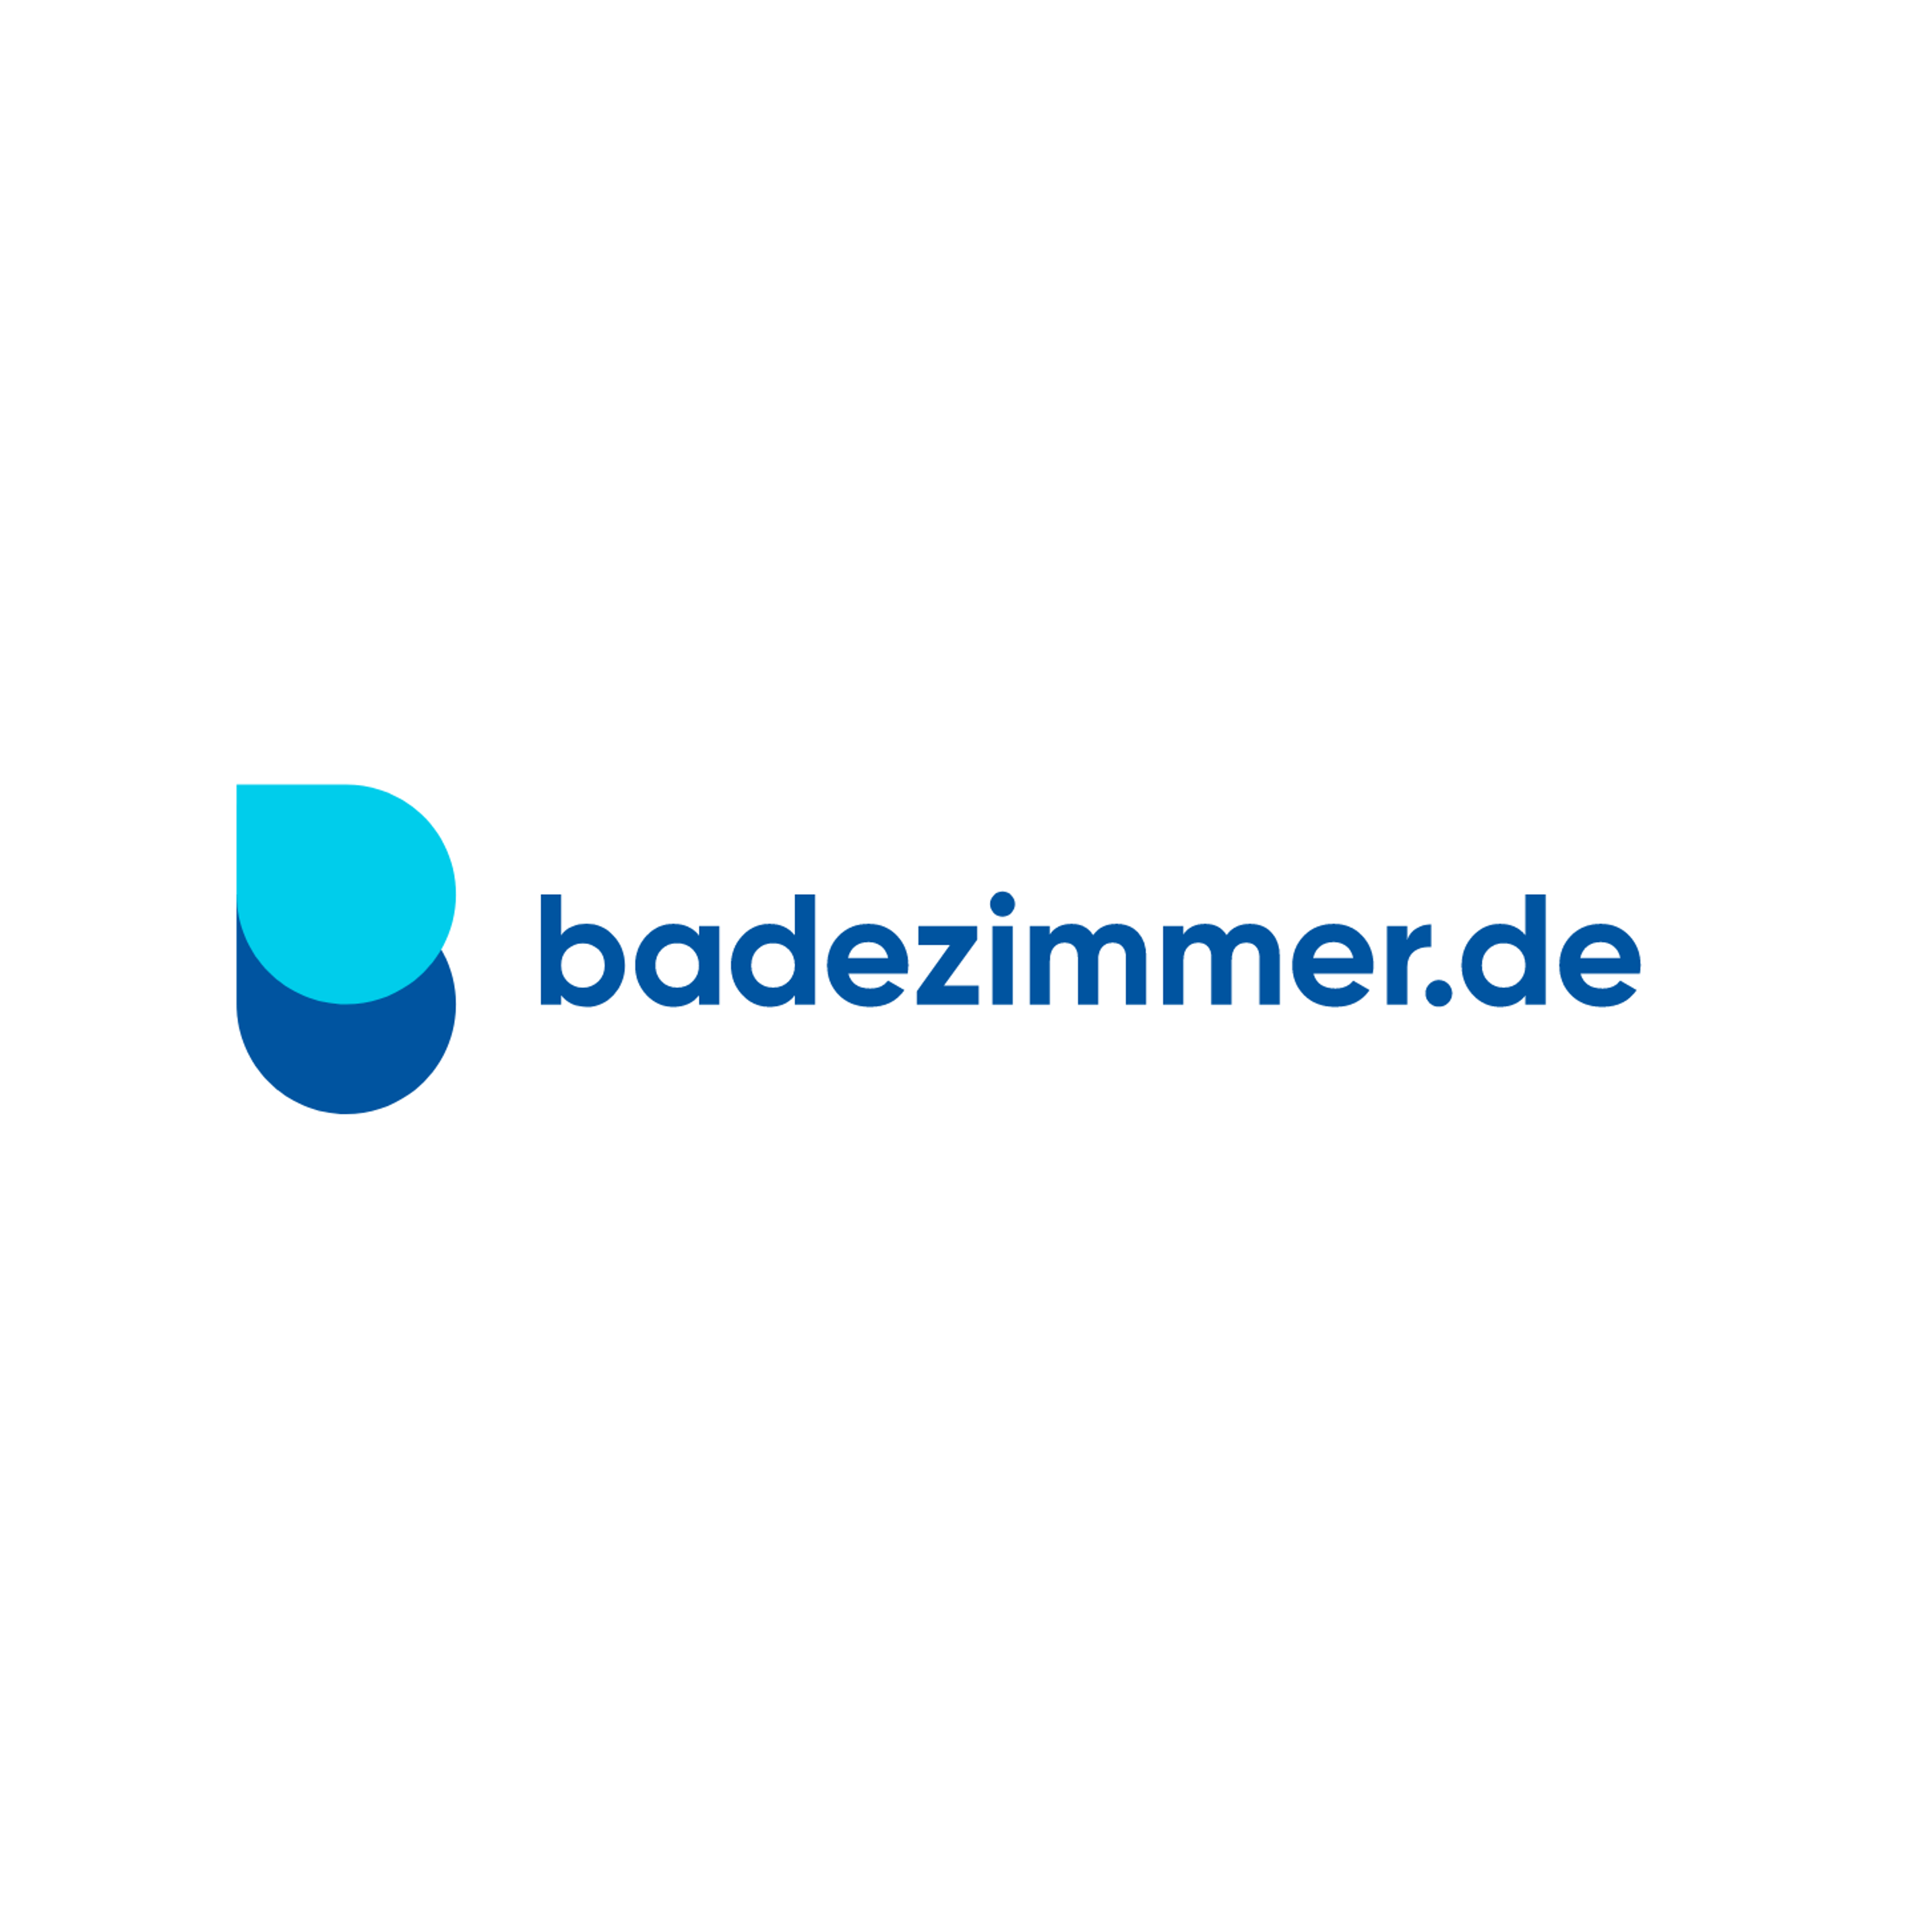 badezimmer.de Badausstellung Münster - ELMER in Münster - Logo